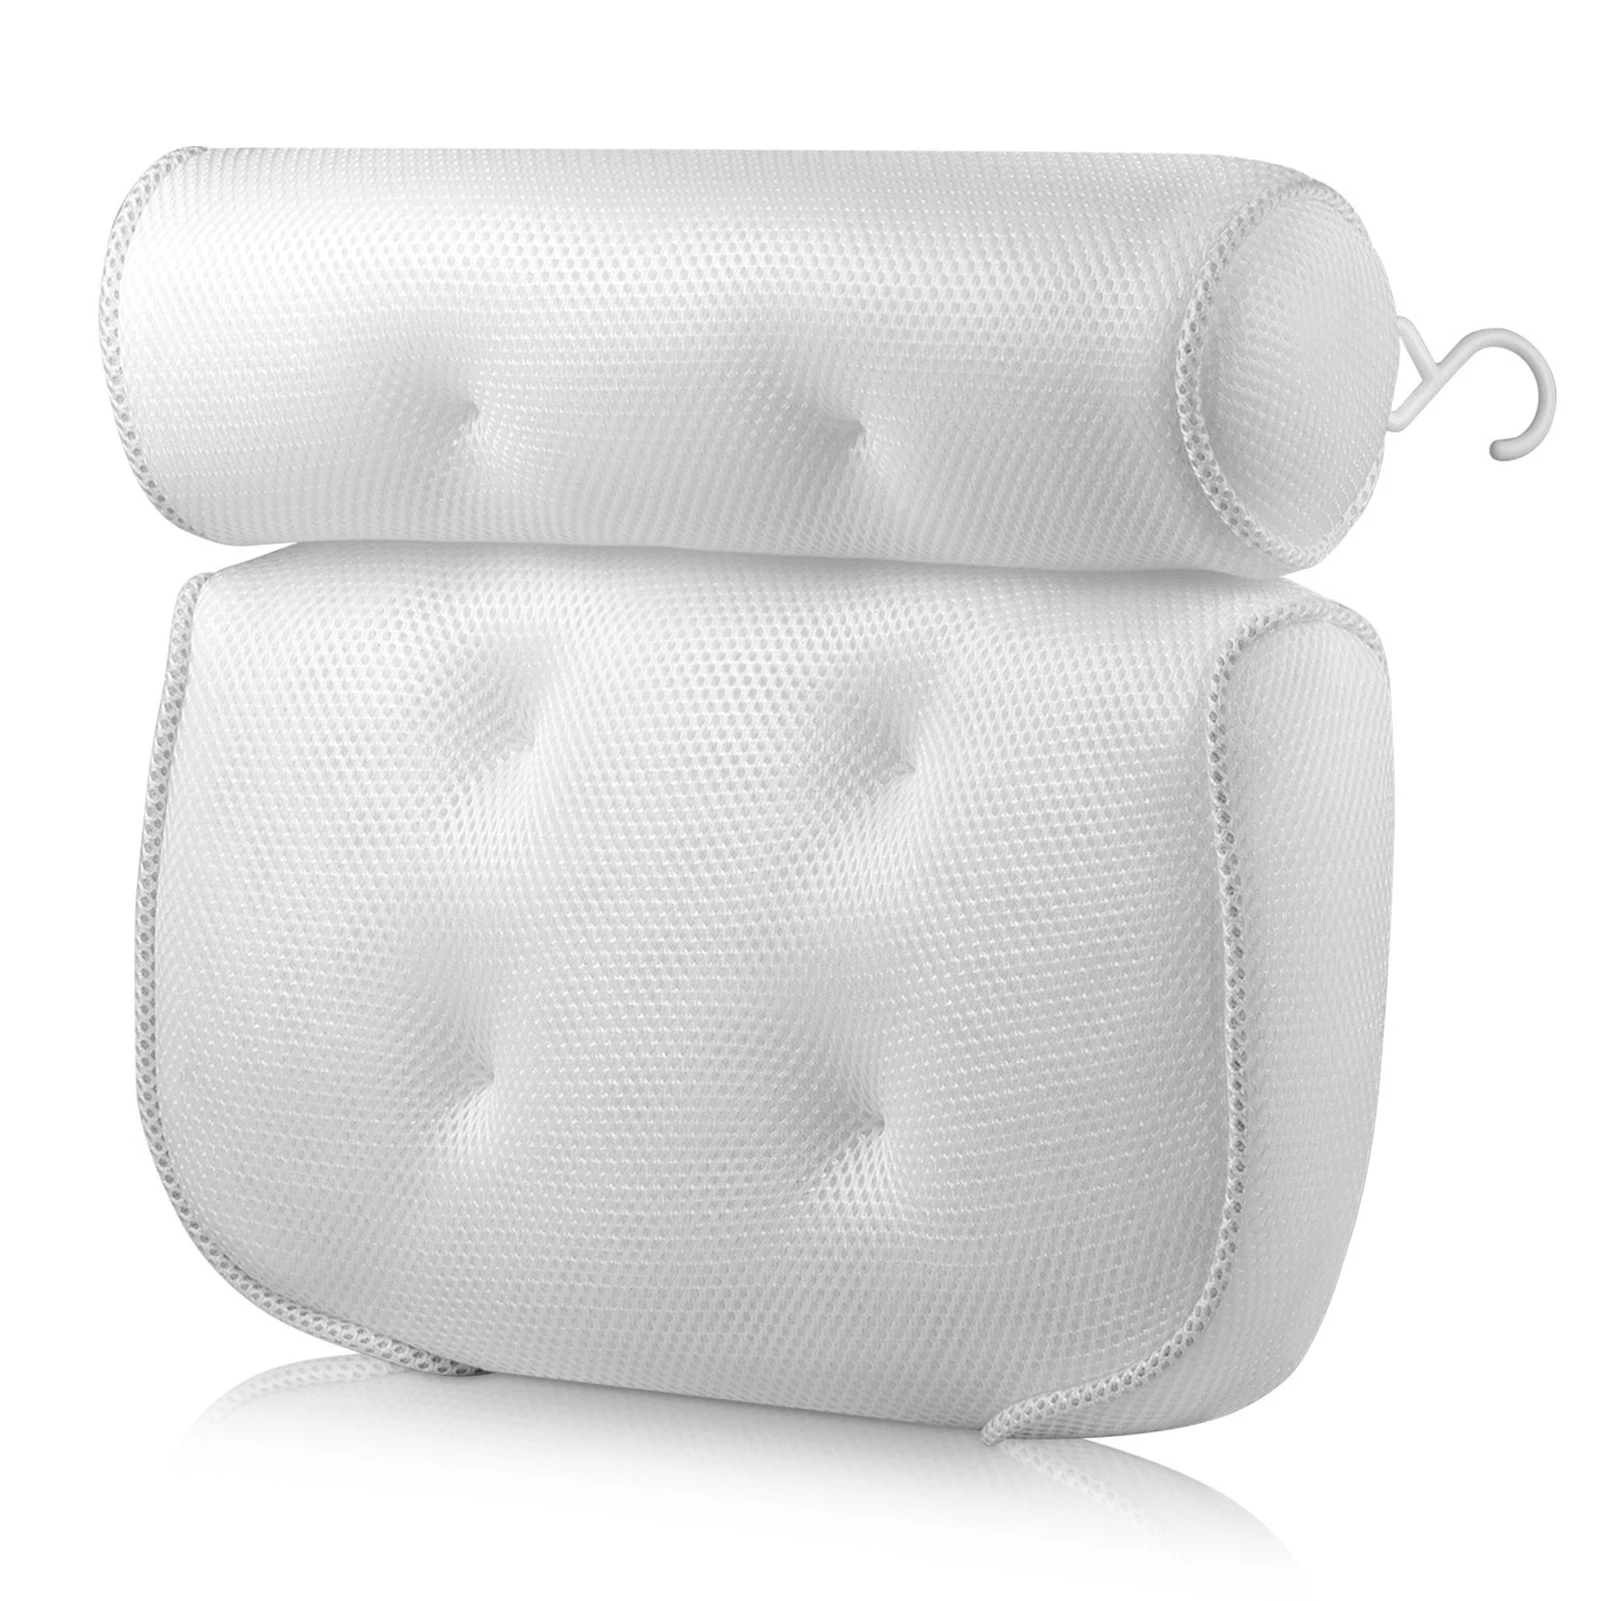 

Luxury Bath Pillow Ergonomic Bathtub Spa Pillow with 3D Air Mesh Technology and 6 Suction Cups for Bathtub Hot Tub K888